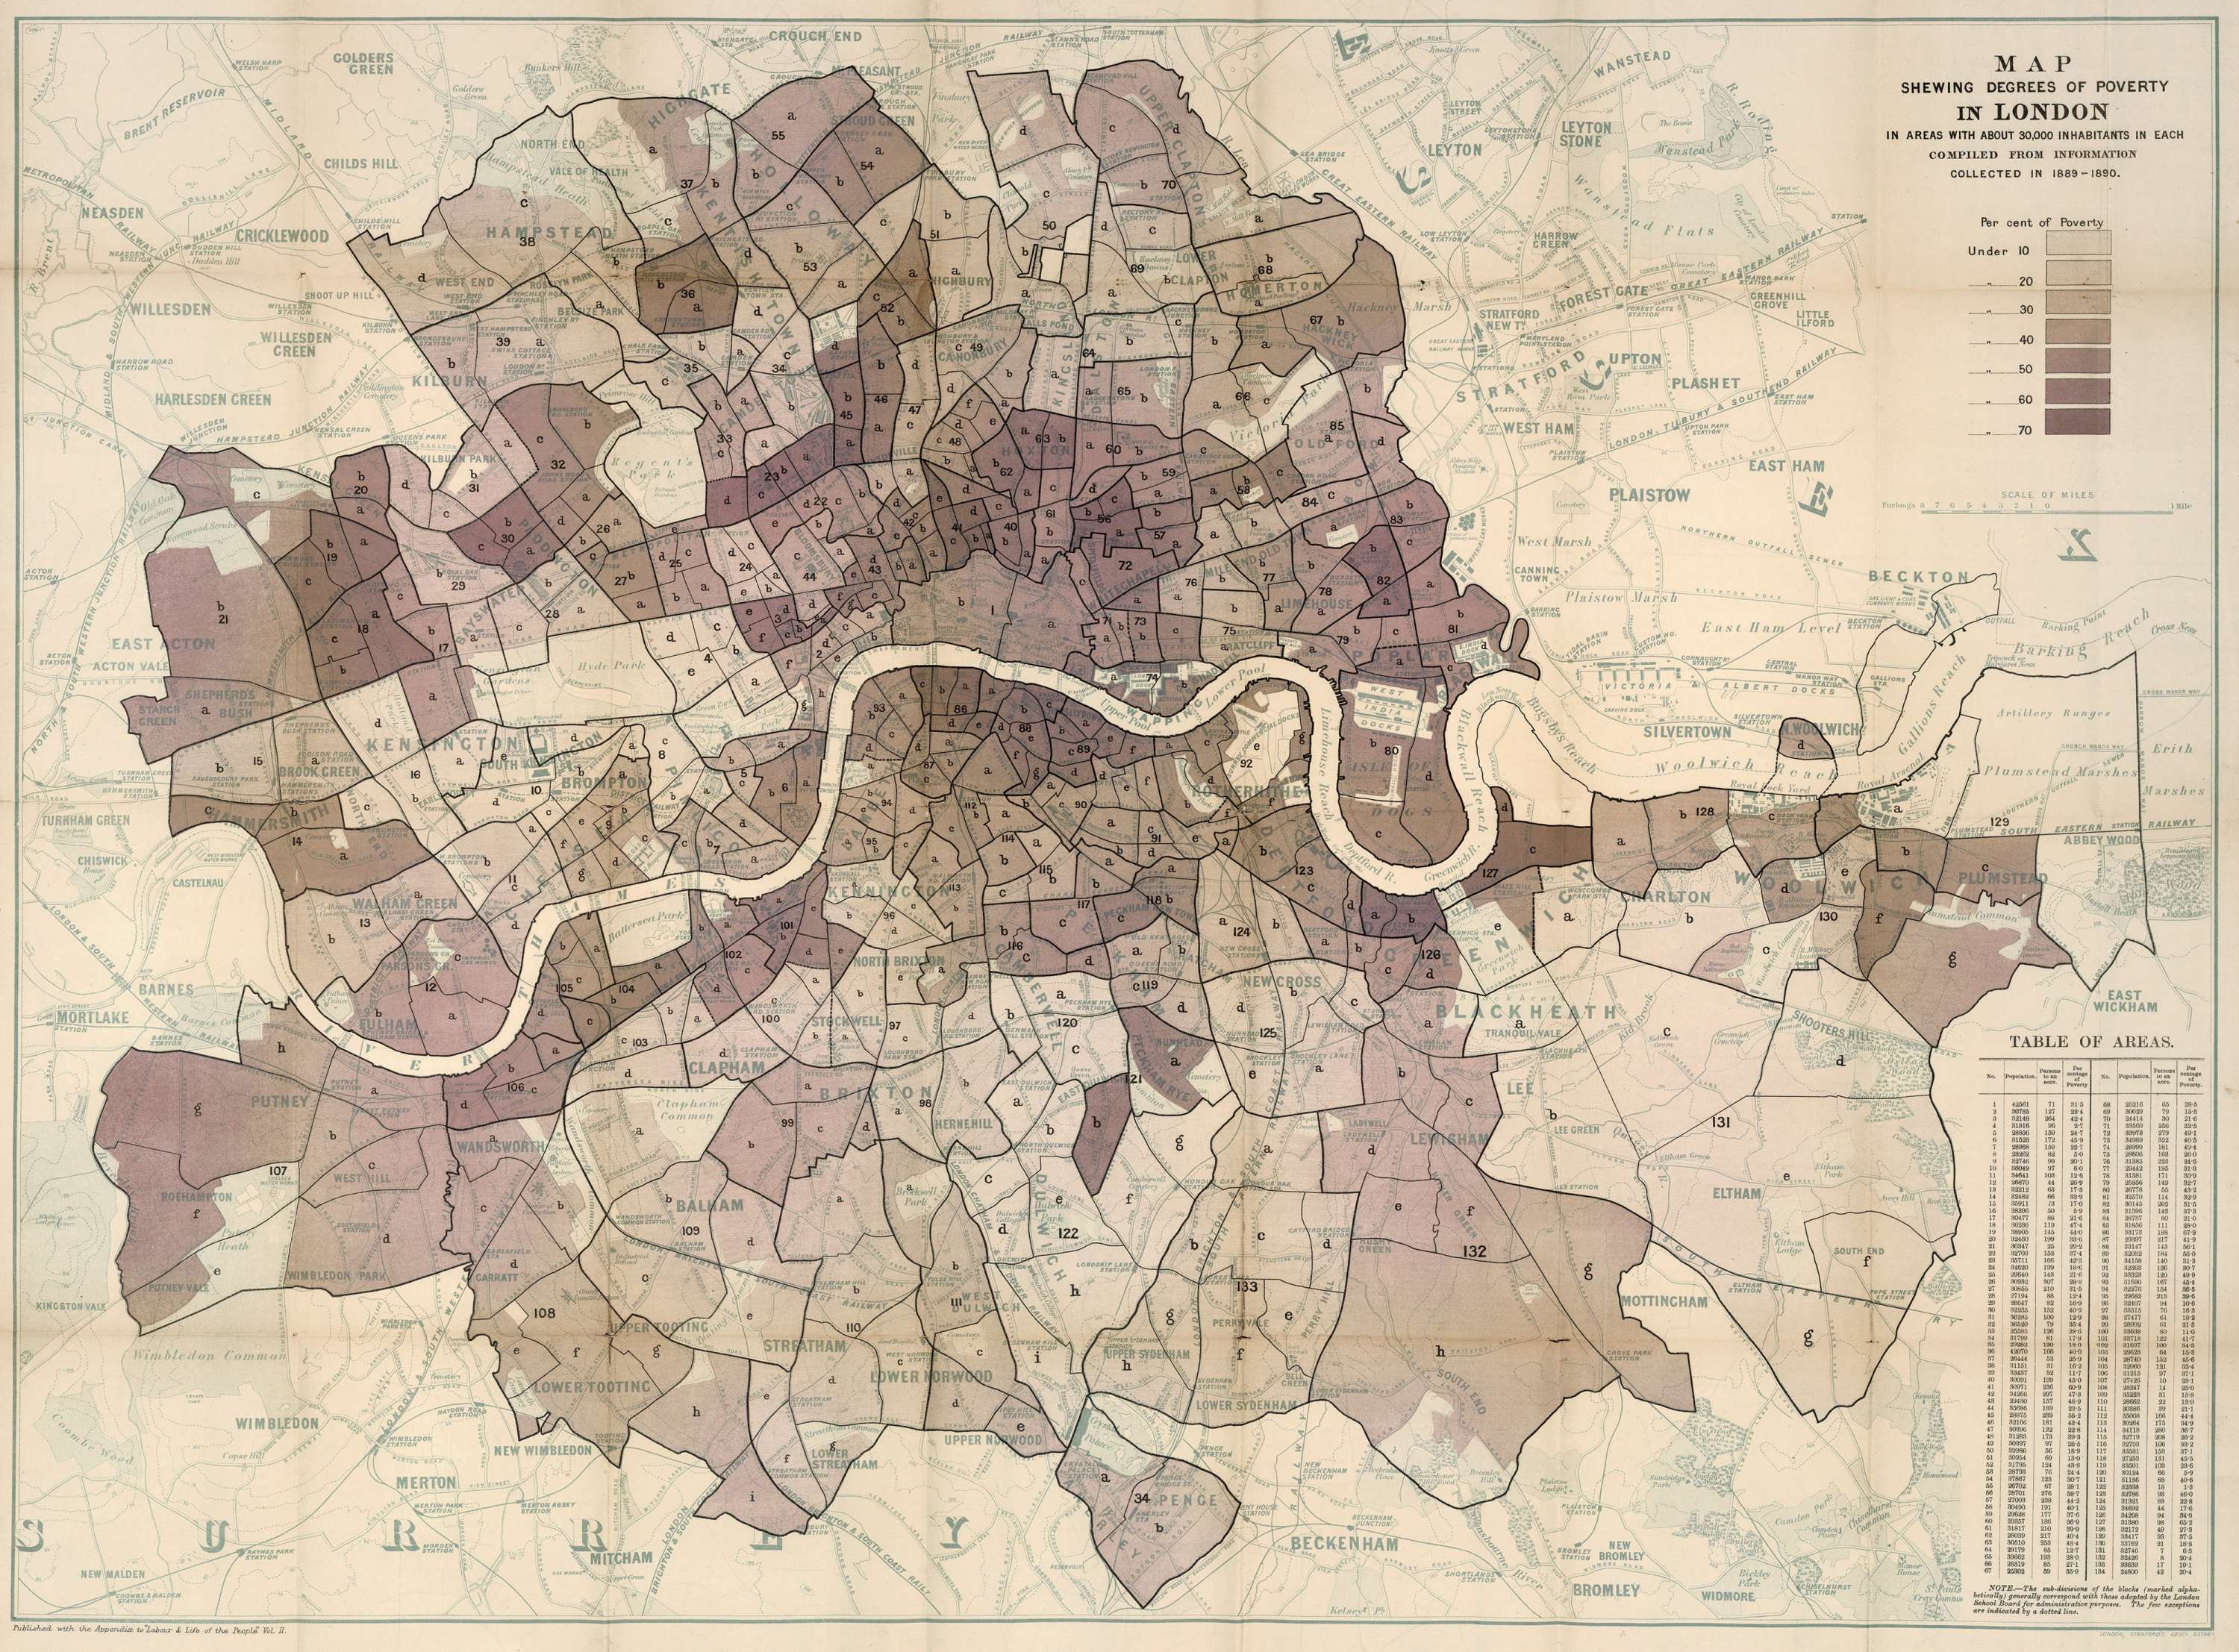 Descriptive map of London poverty